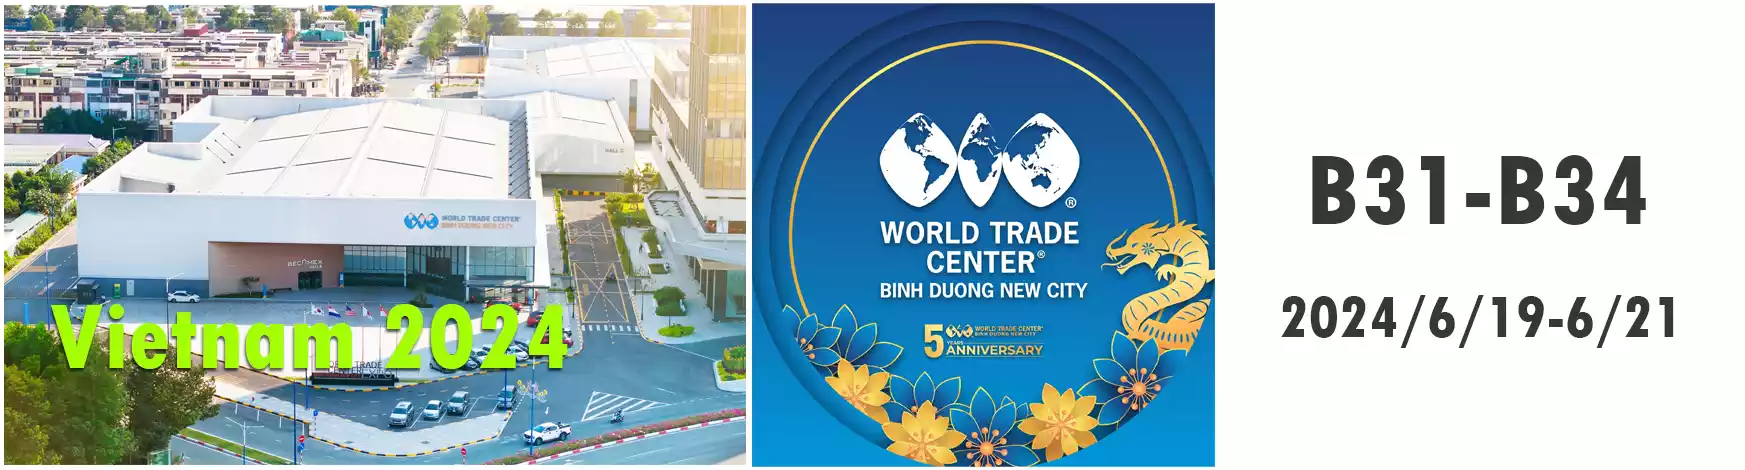 2024 Vietnam New City Exhibition Information